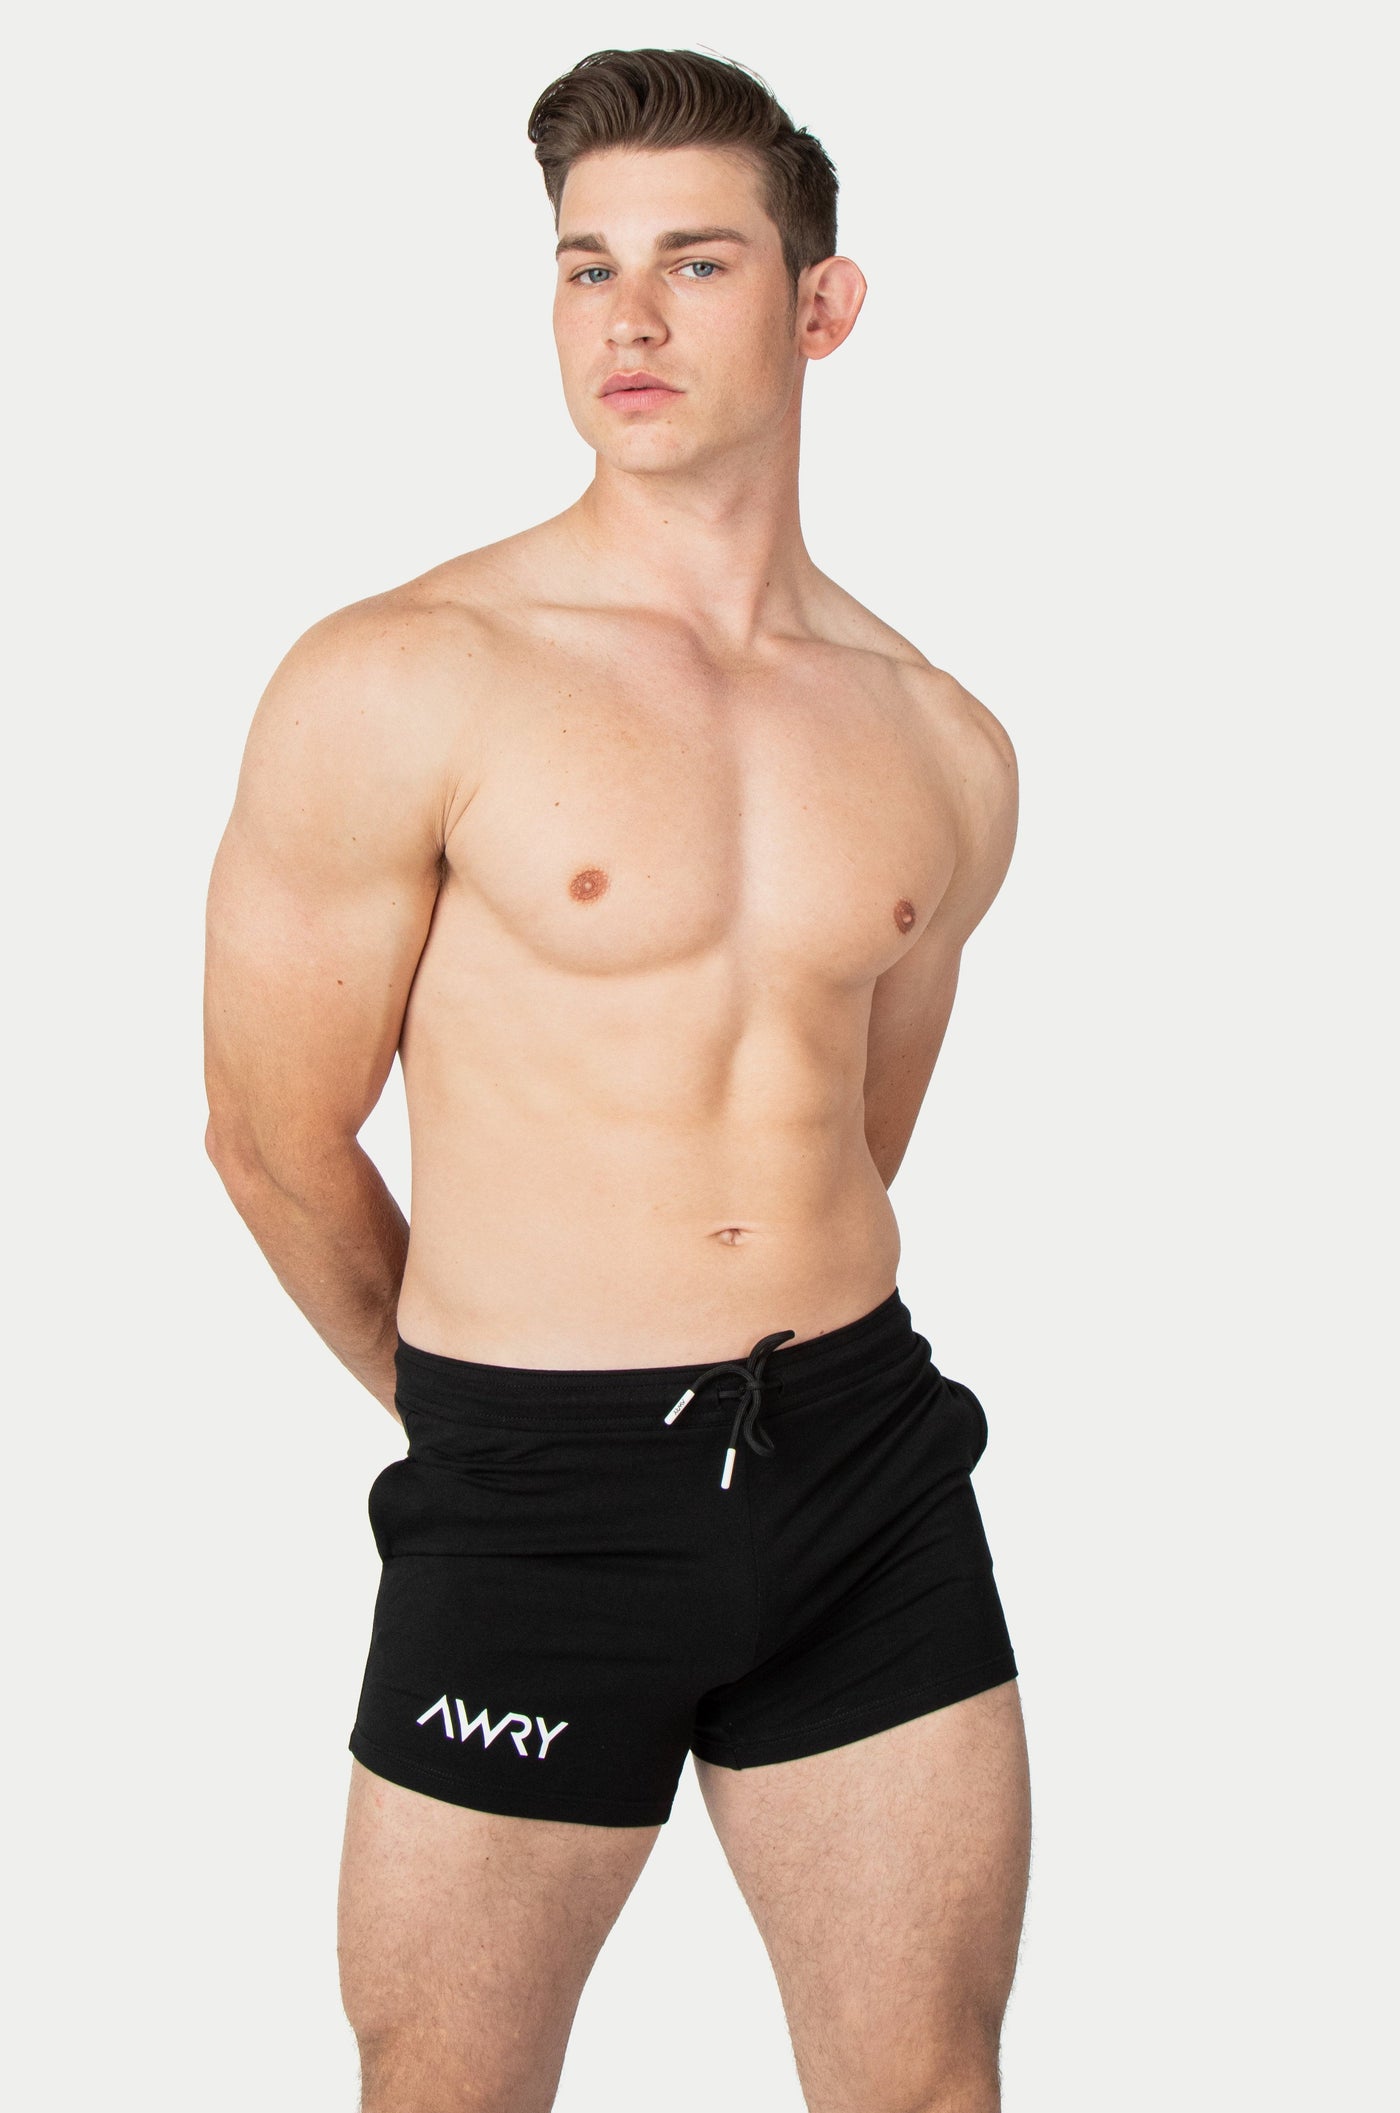 InWear ThinaIW Shorts Black – Shop Black ThinaIW Shorts from size 32-44 here